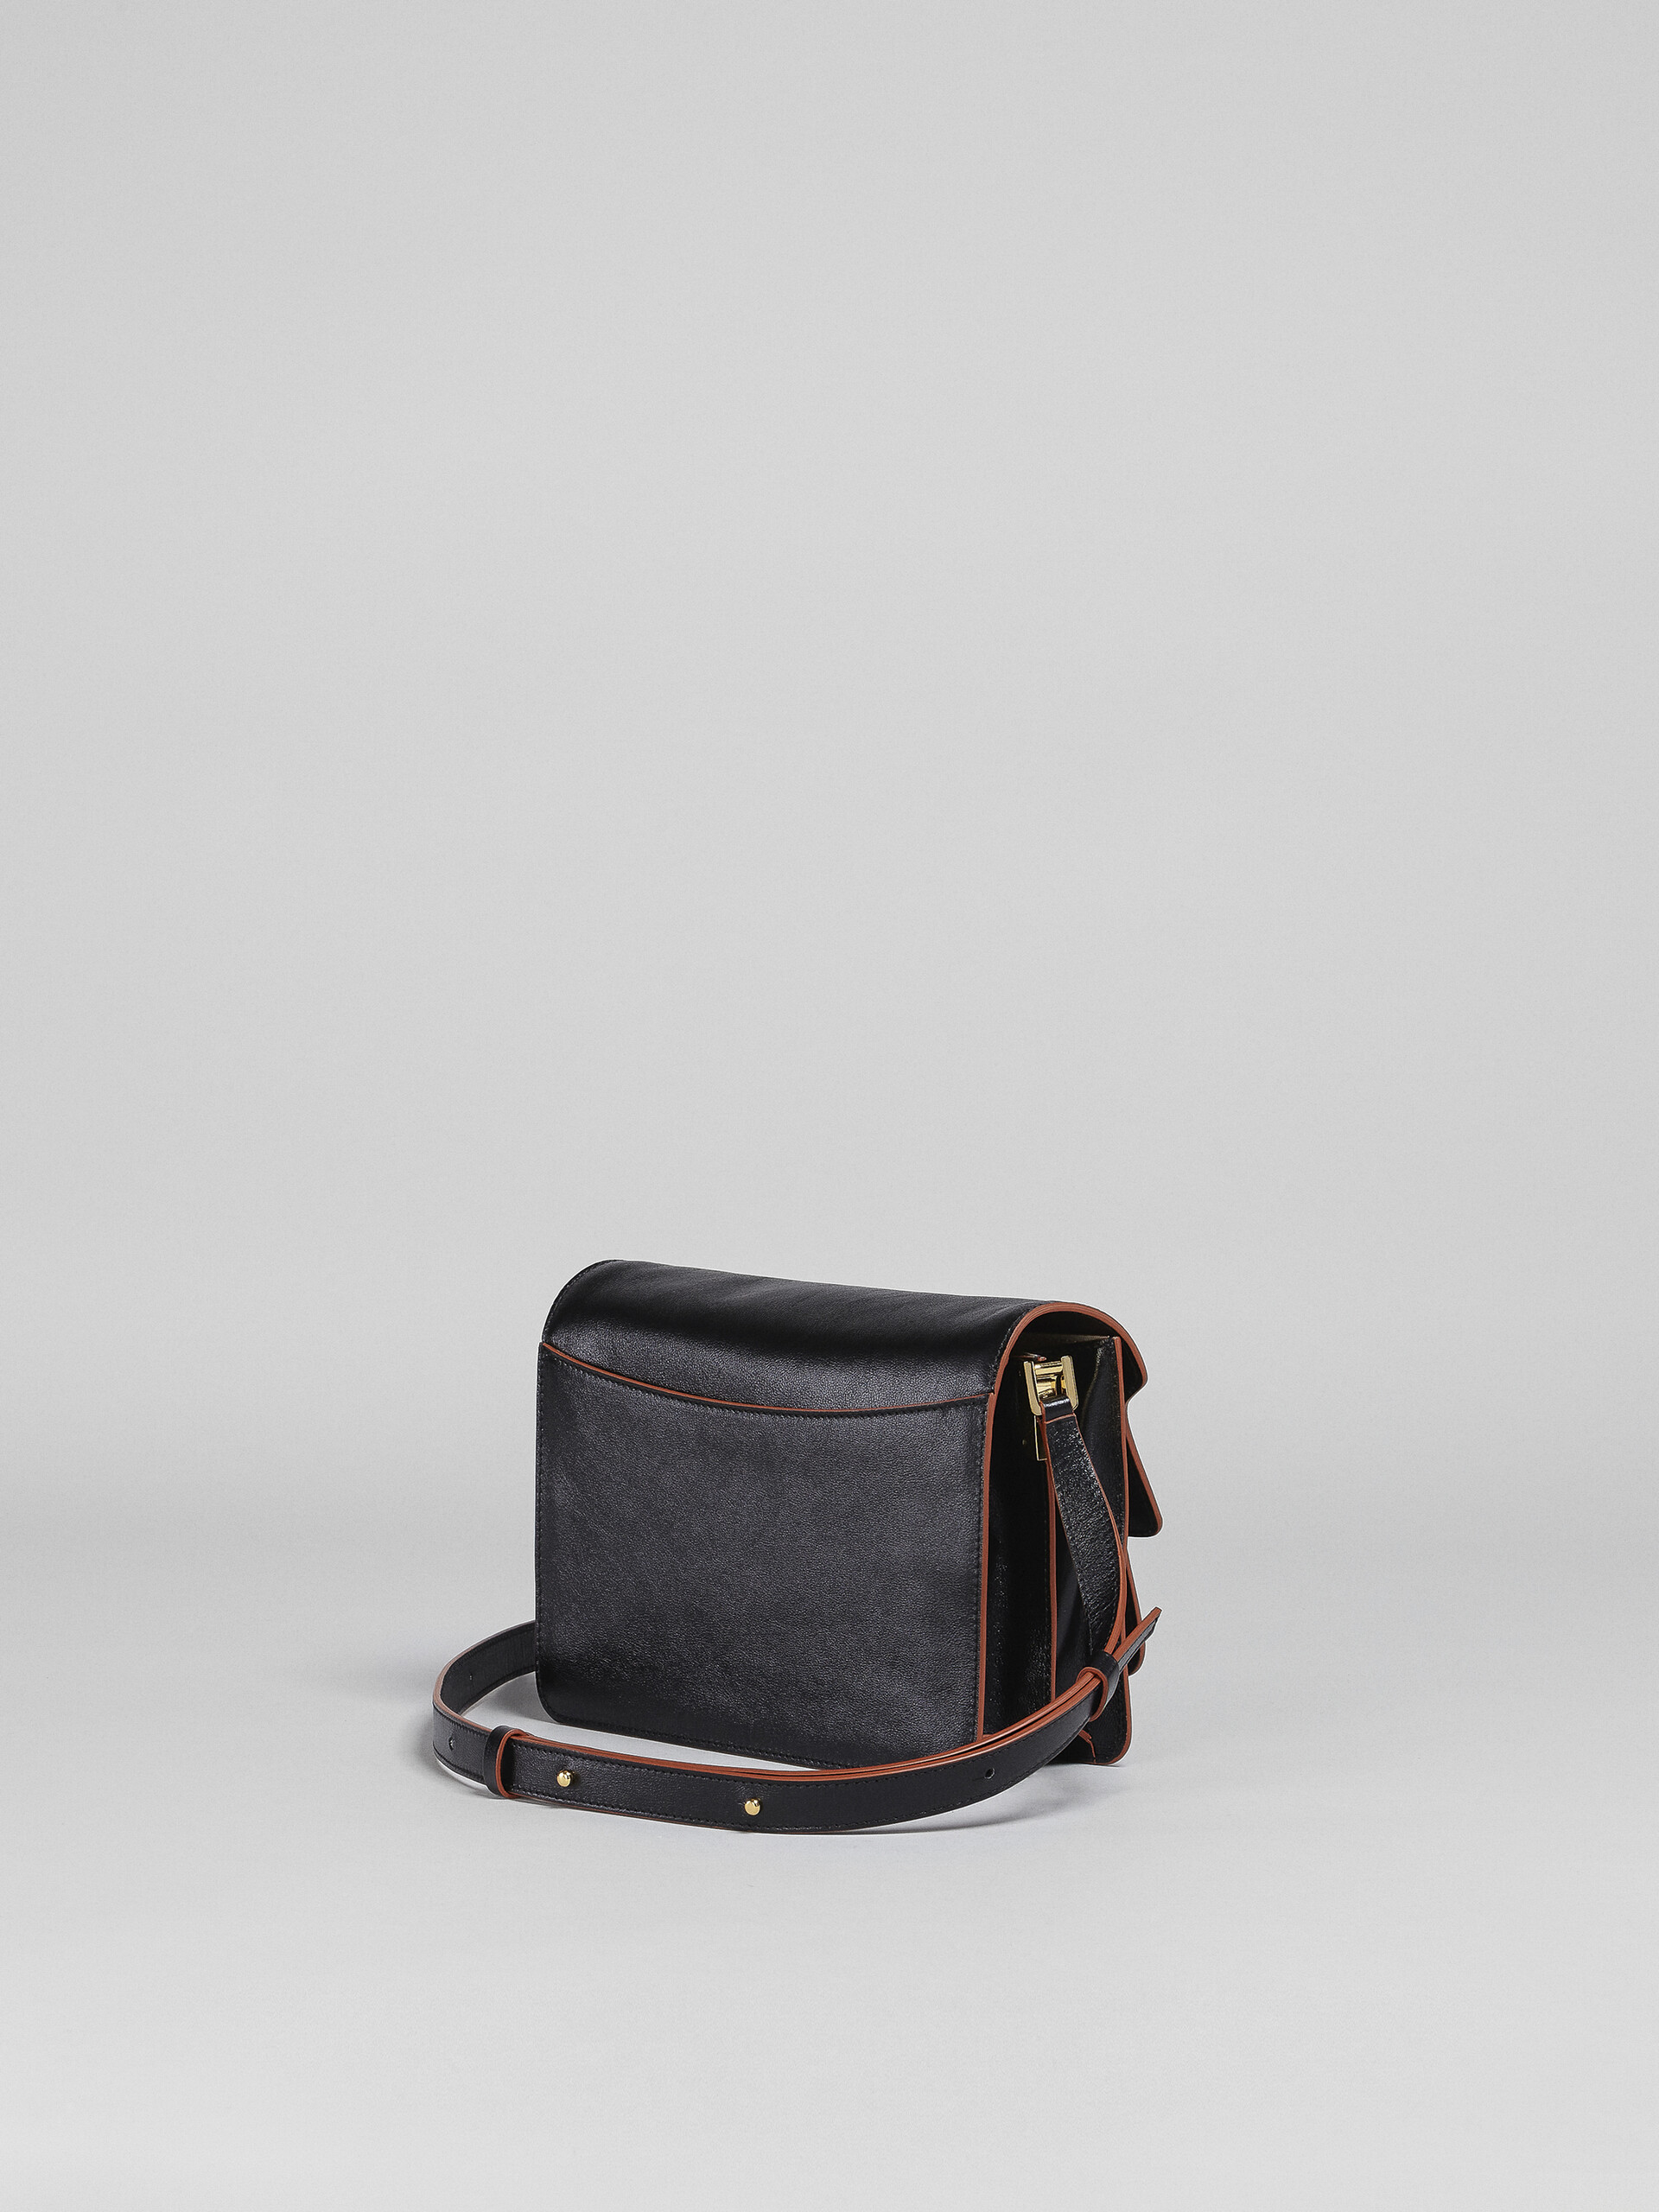 TRUNK SOFT medium bag in brown leather - Shoulder Bags - Image 3